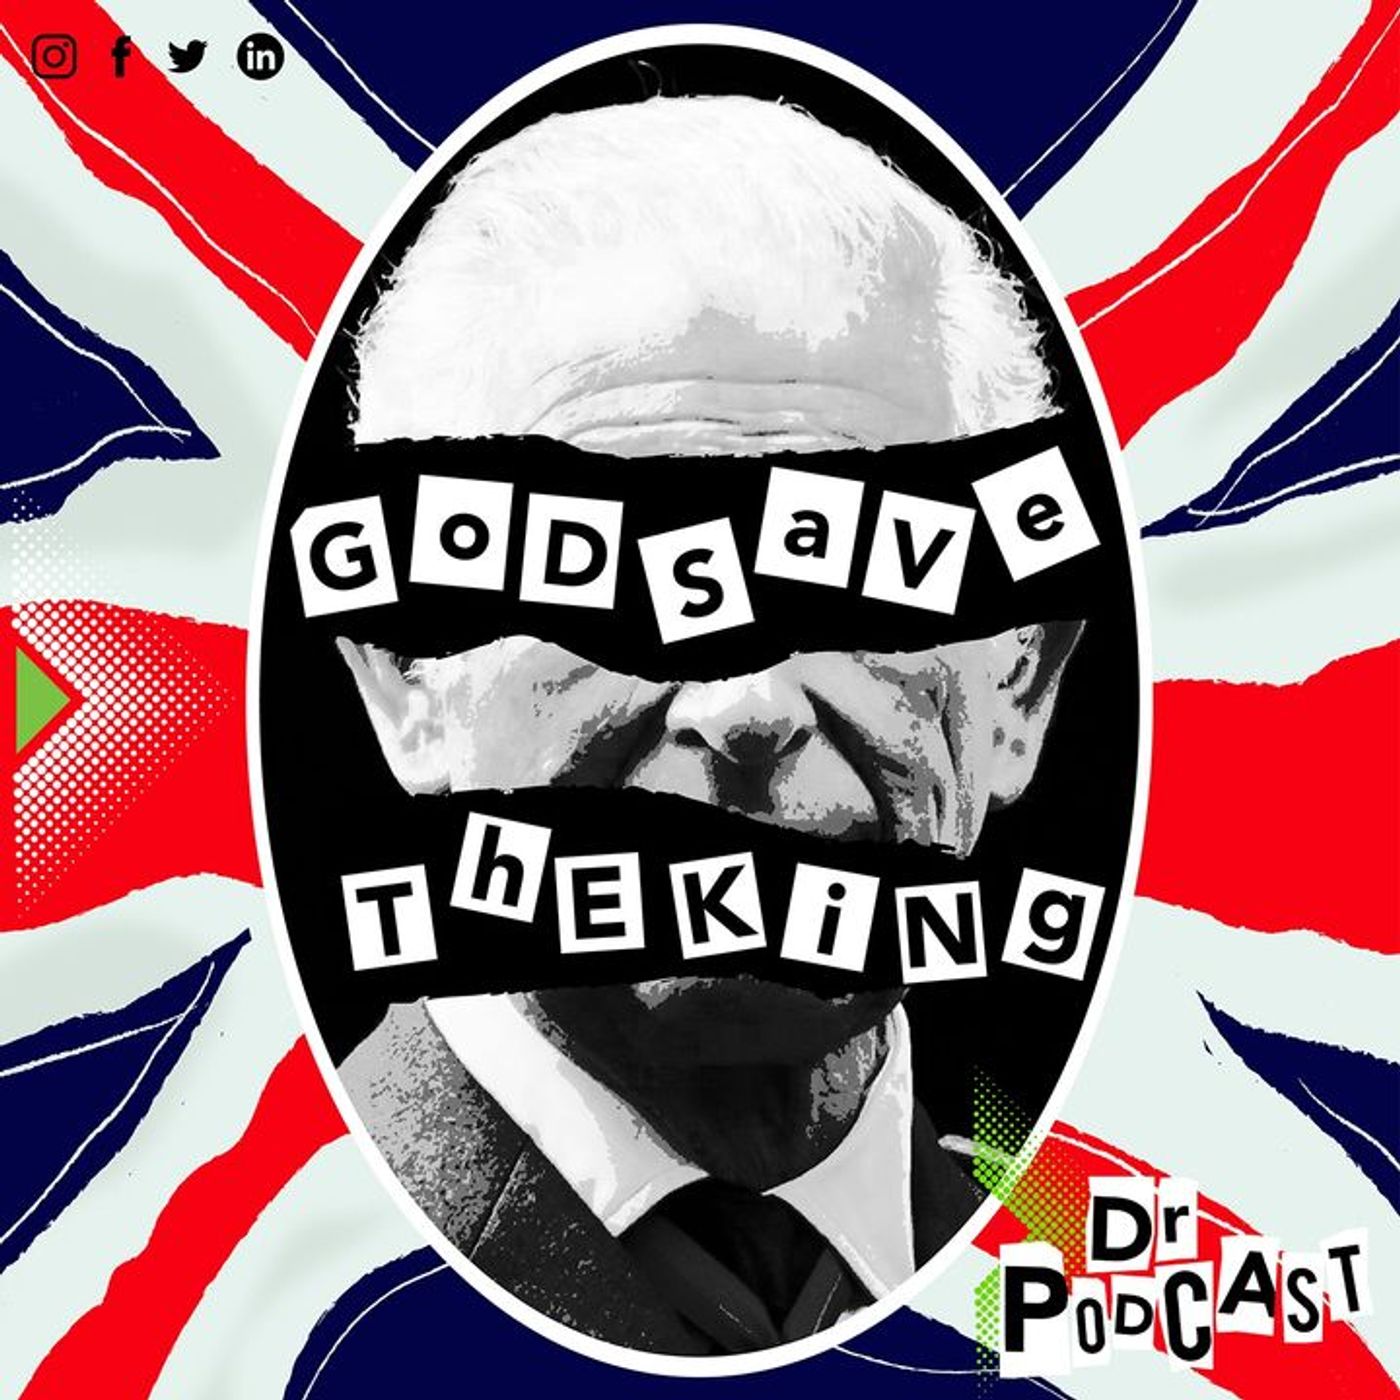 Dr Podcast - God Save The King